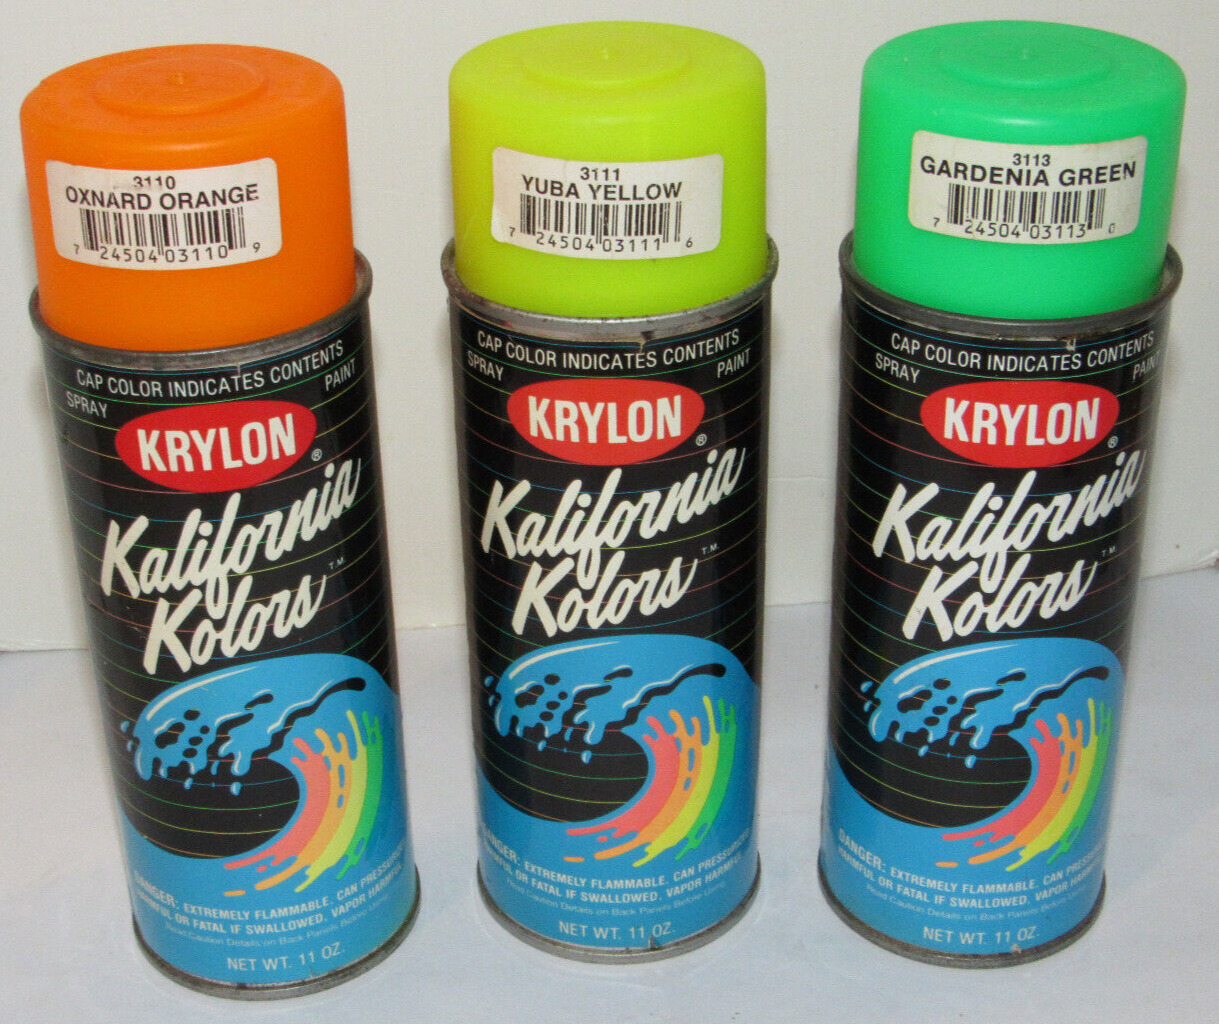 3 VINTAGE 1990s KRYLON 'KALIFORNIA KOLORS' SPRAY PAINT CANS ORANGE/YELLOW/GREEN